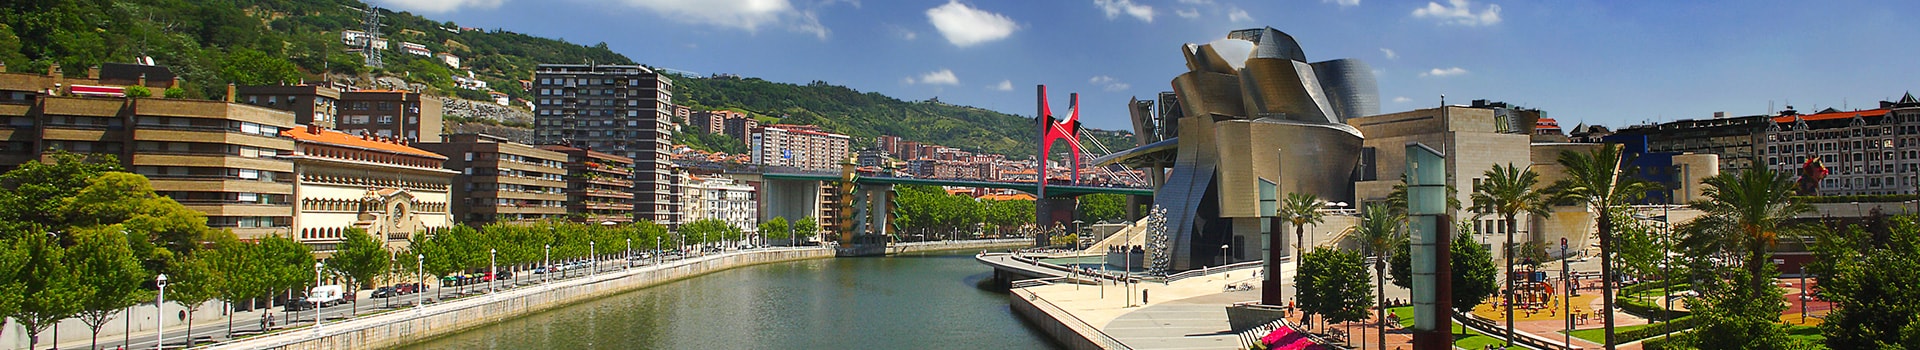 Menorca - Bilbao